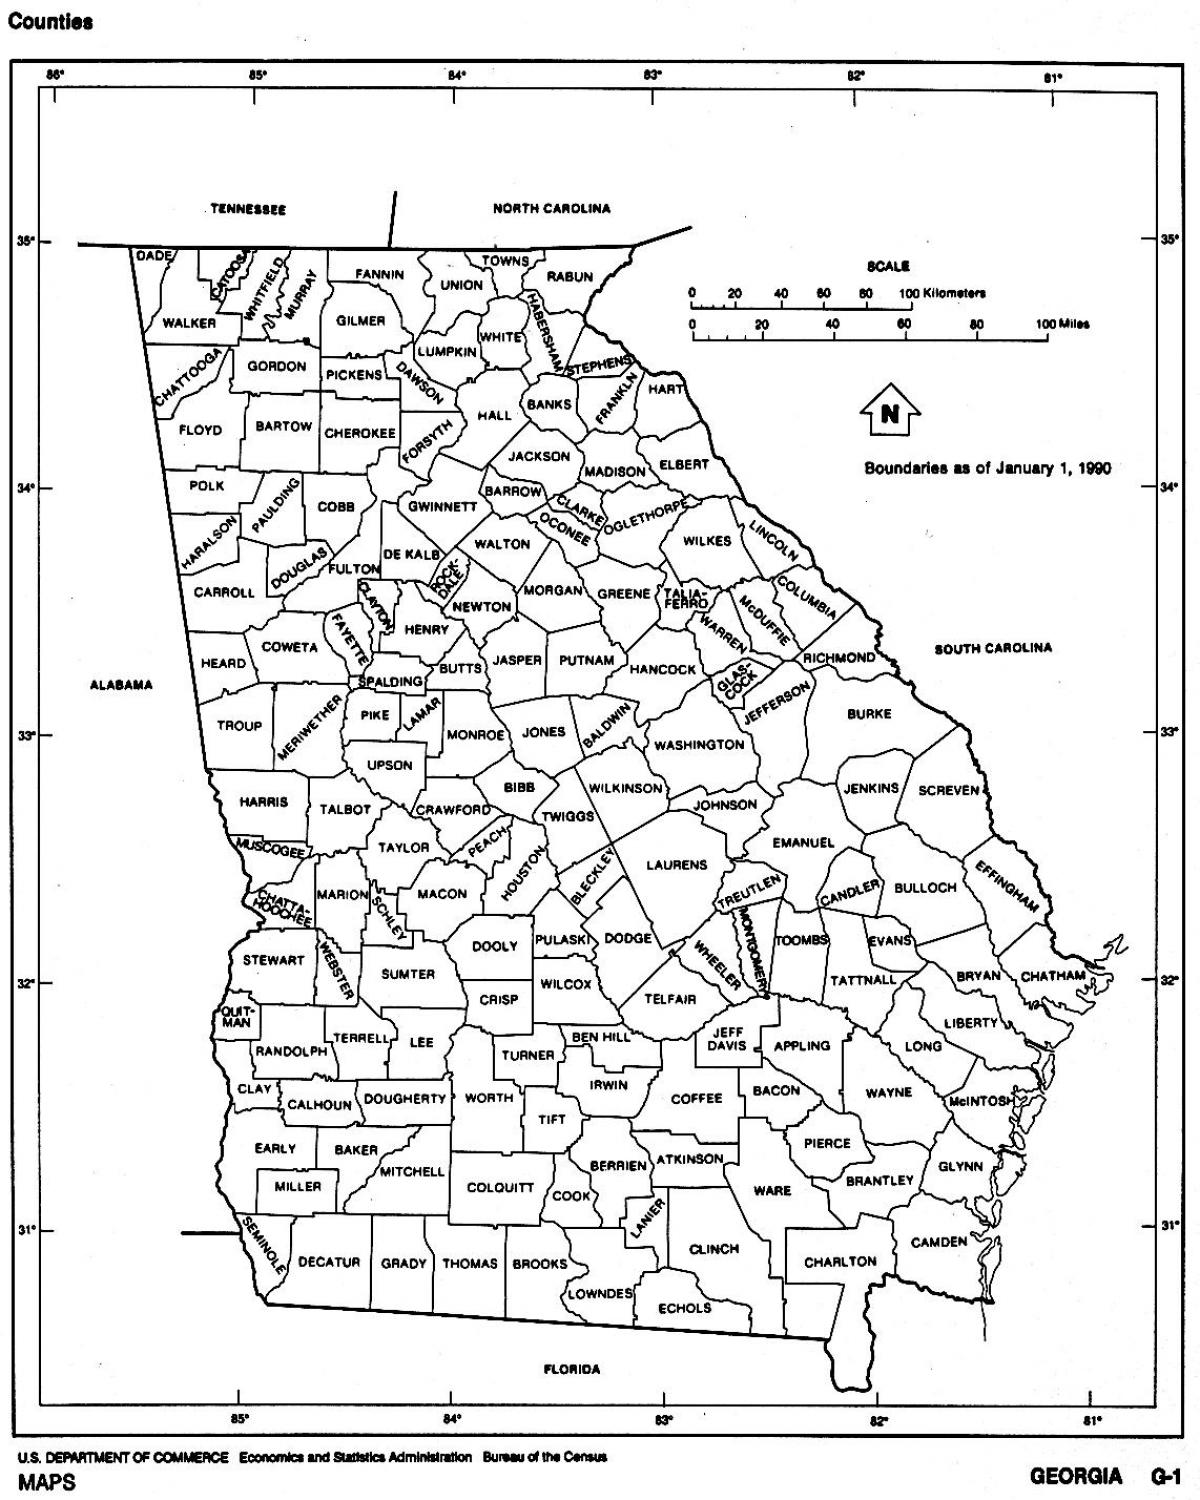 Georgia state karta